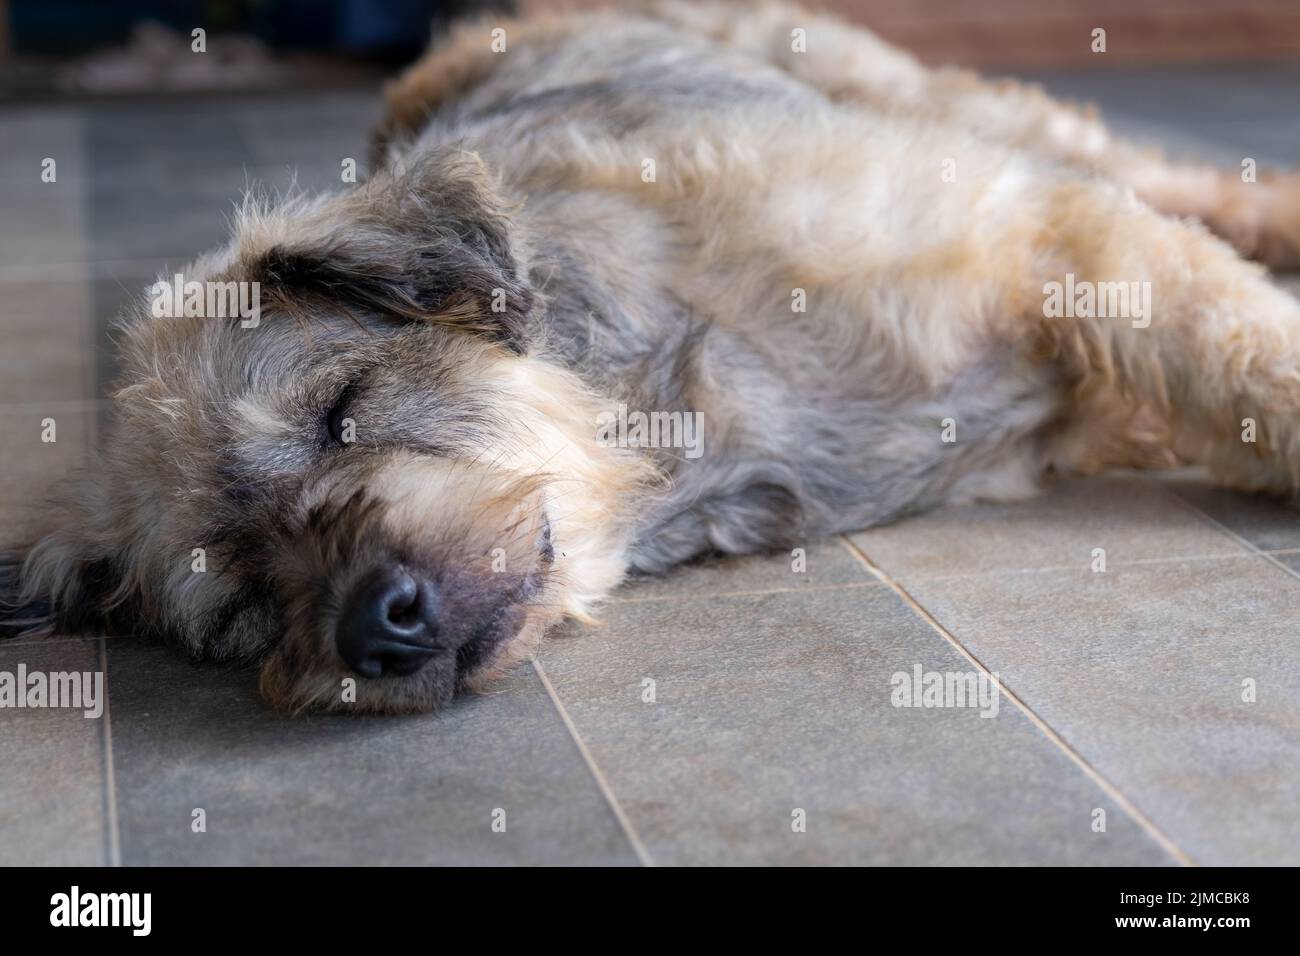 Dog pet sleep lazy lay down canine sit concept. Stock Photo